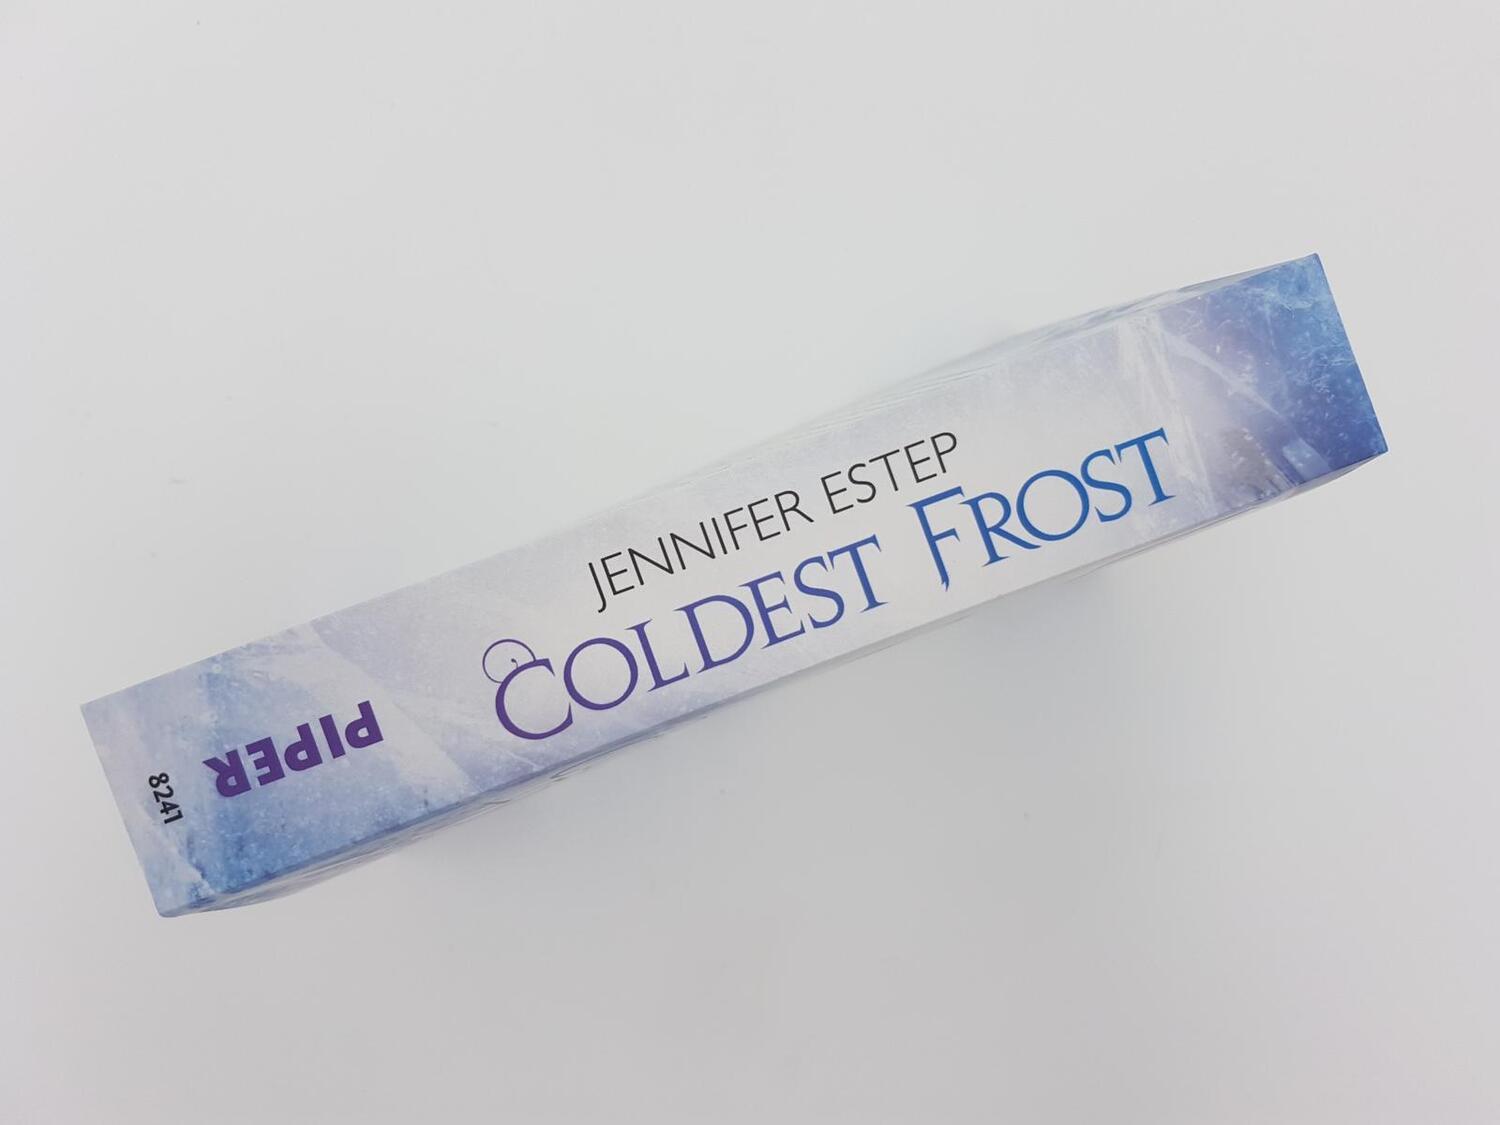 Bild: 9783492282413 | Coldest Frost | Mythos Academy Colorado 3 Für Fantasy-Fans ab 14!